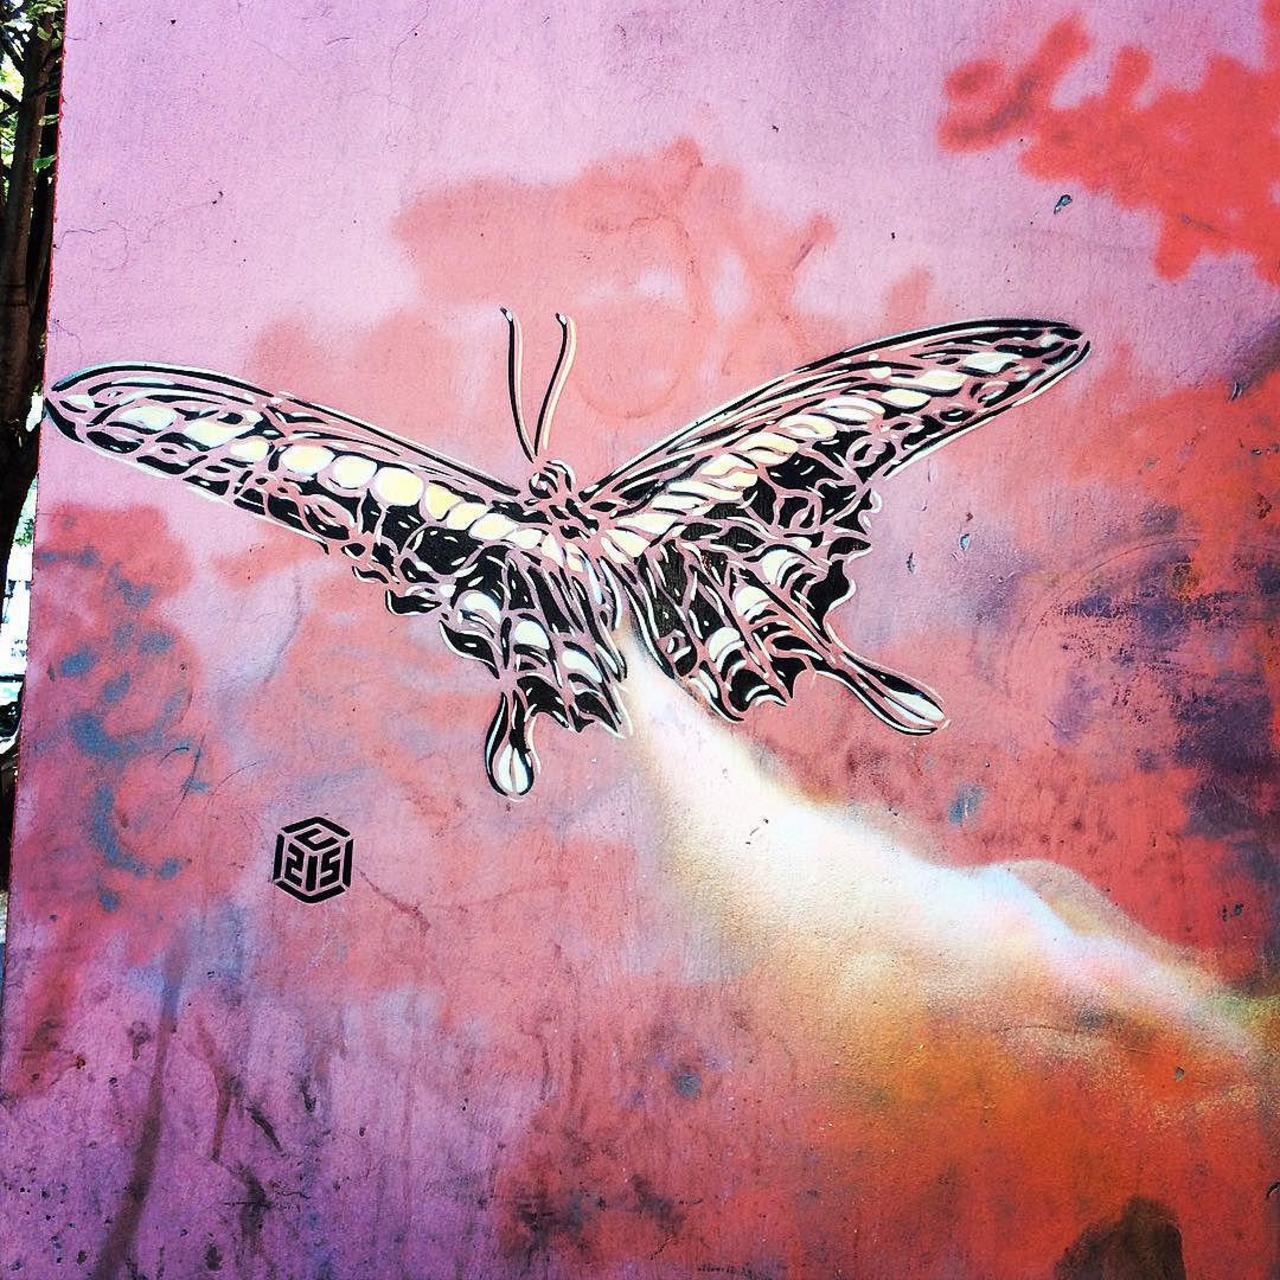 #Paris #graffiti photo by @julosteart http://ift.tt/1Jy1moI #StreetArt http://t.co/4EJIz2HVG1